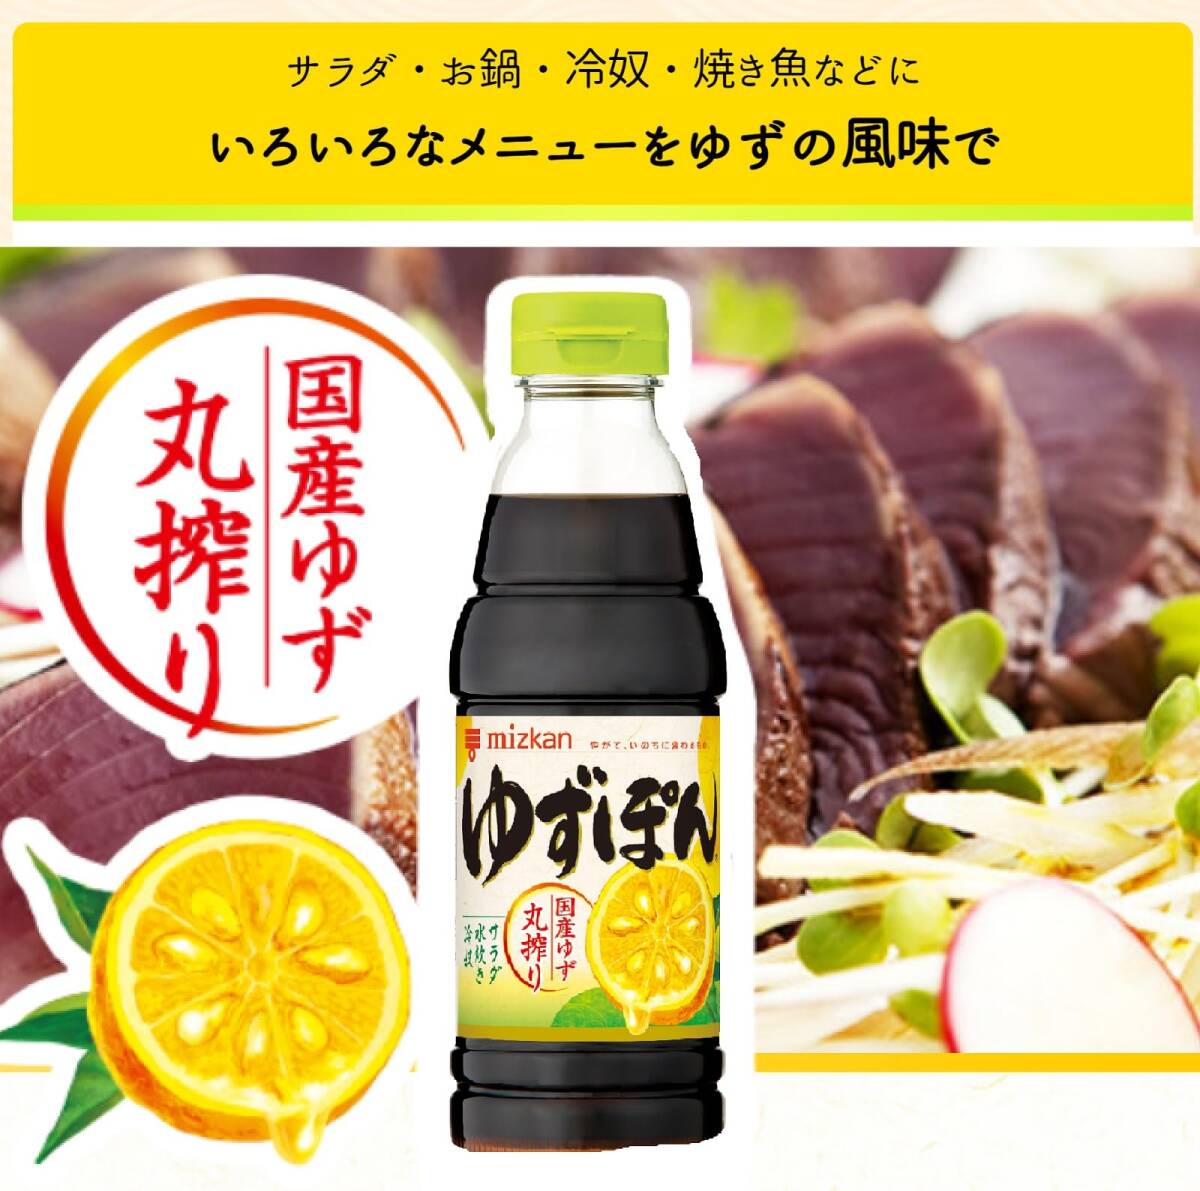 mitsu can business use yuzu ..1.8L.. vinegar pon vinegar 